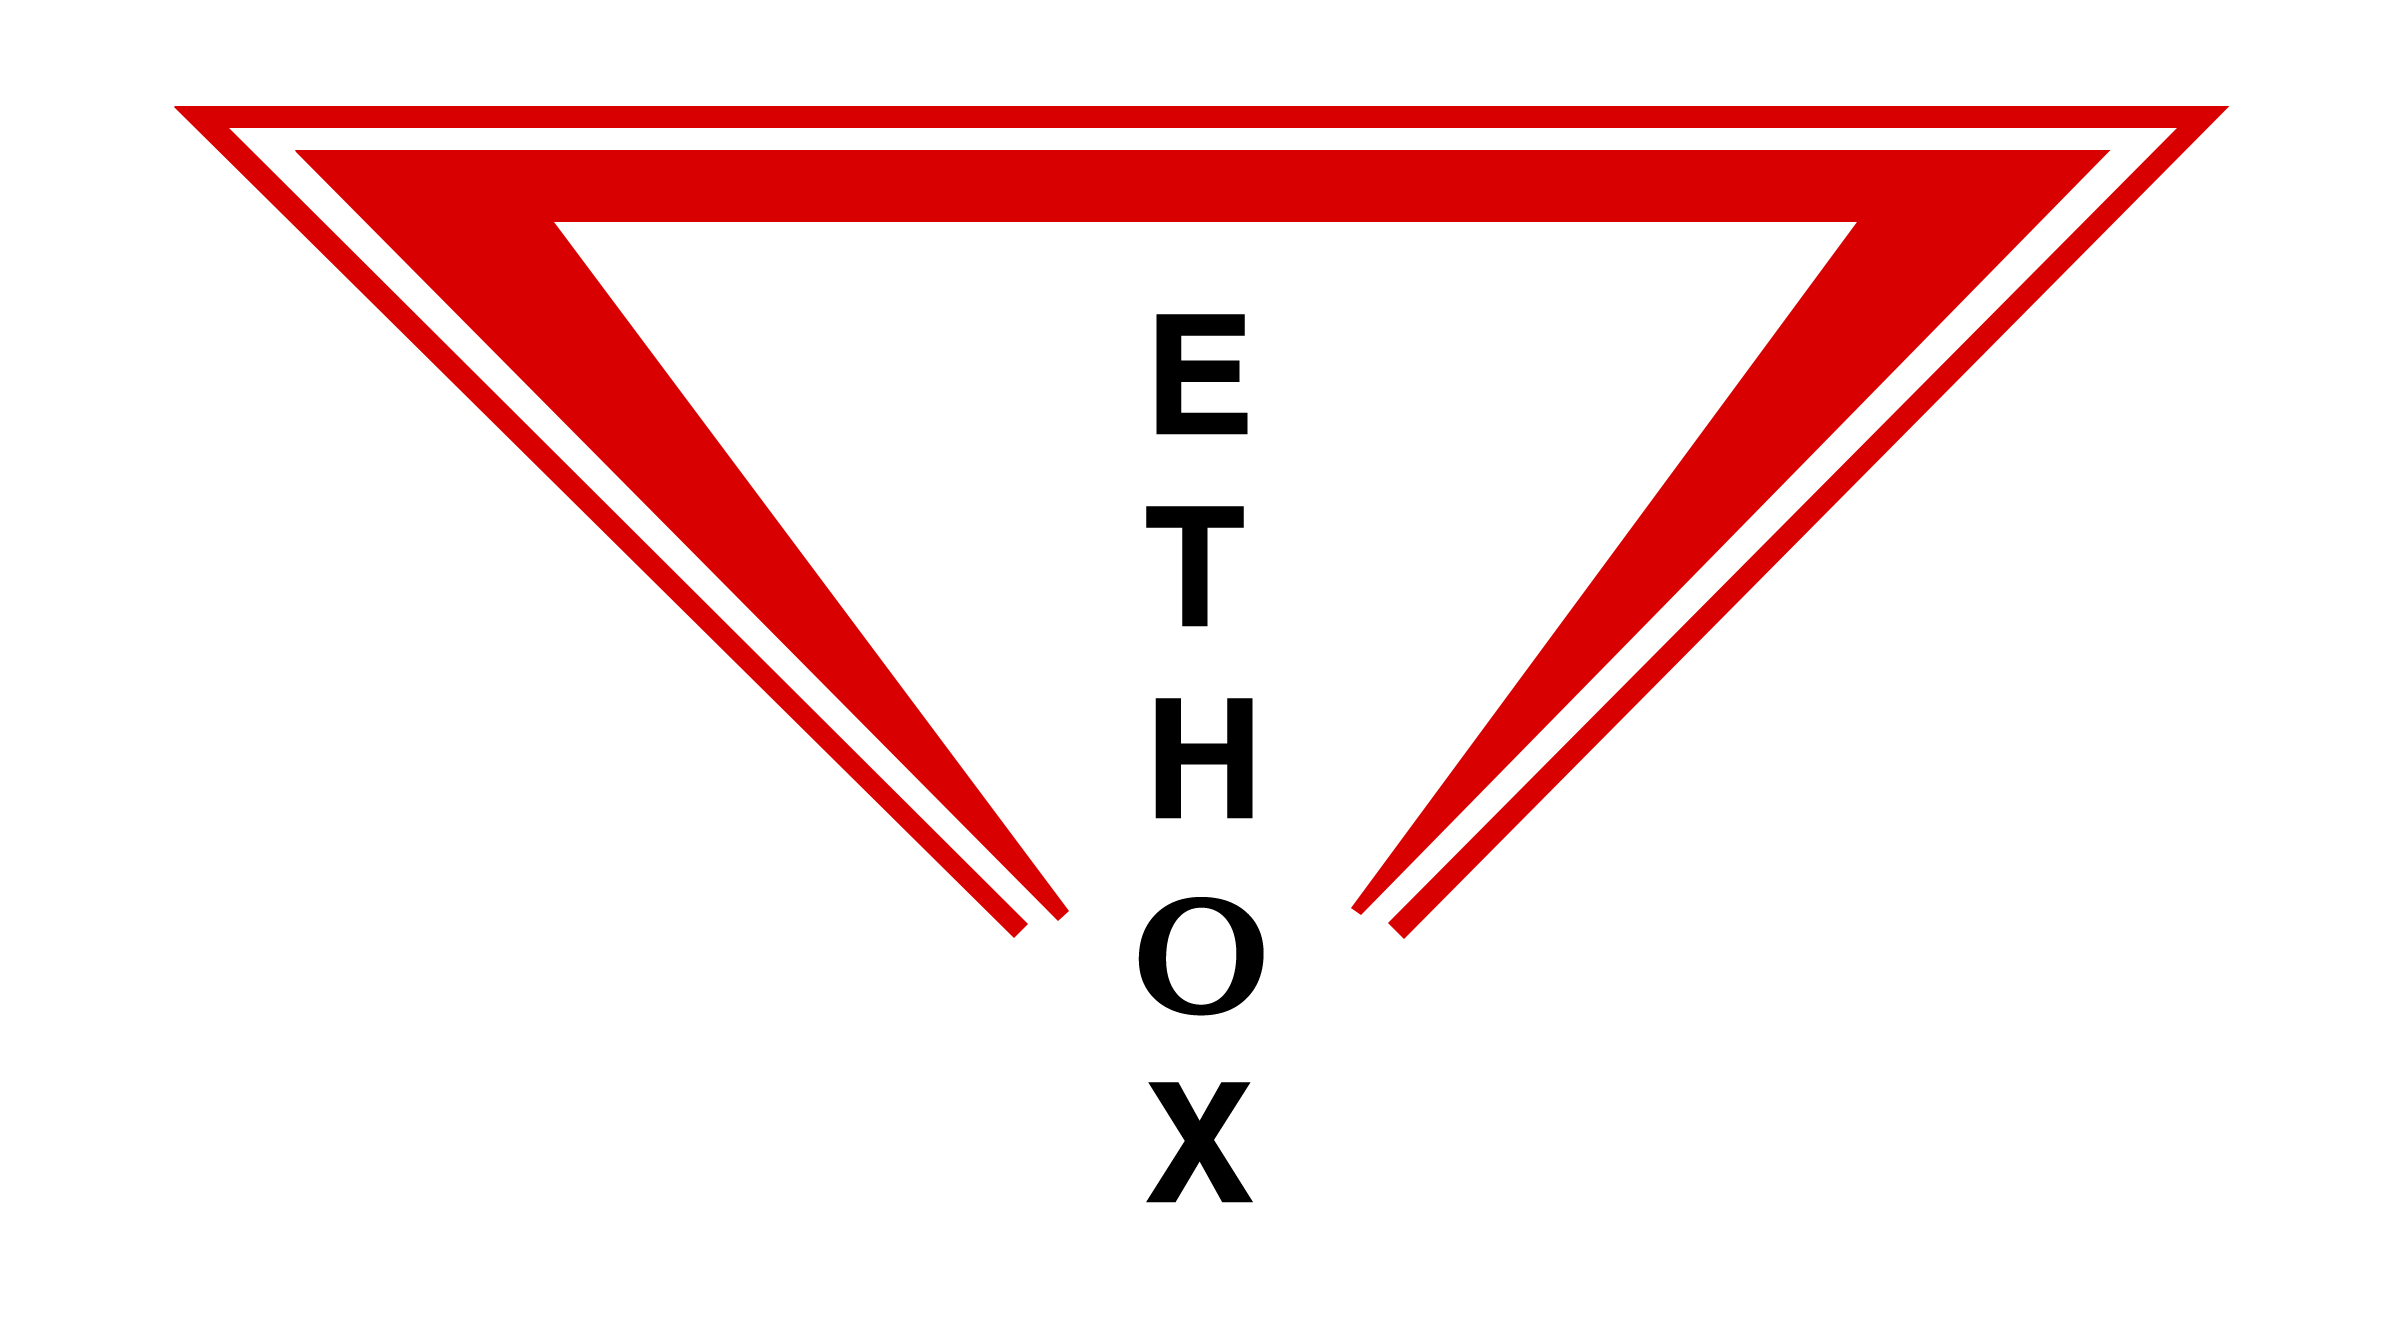 Ethox